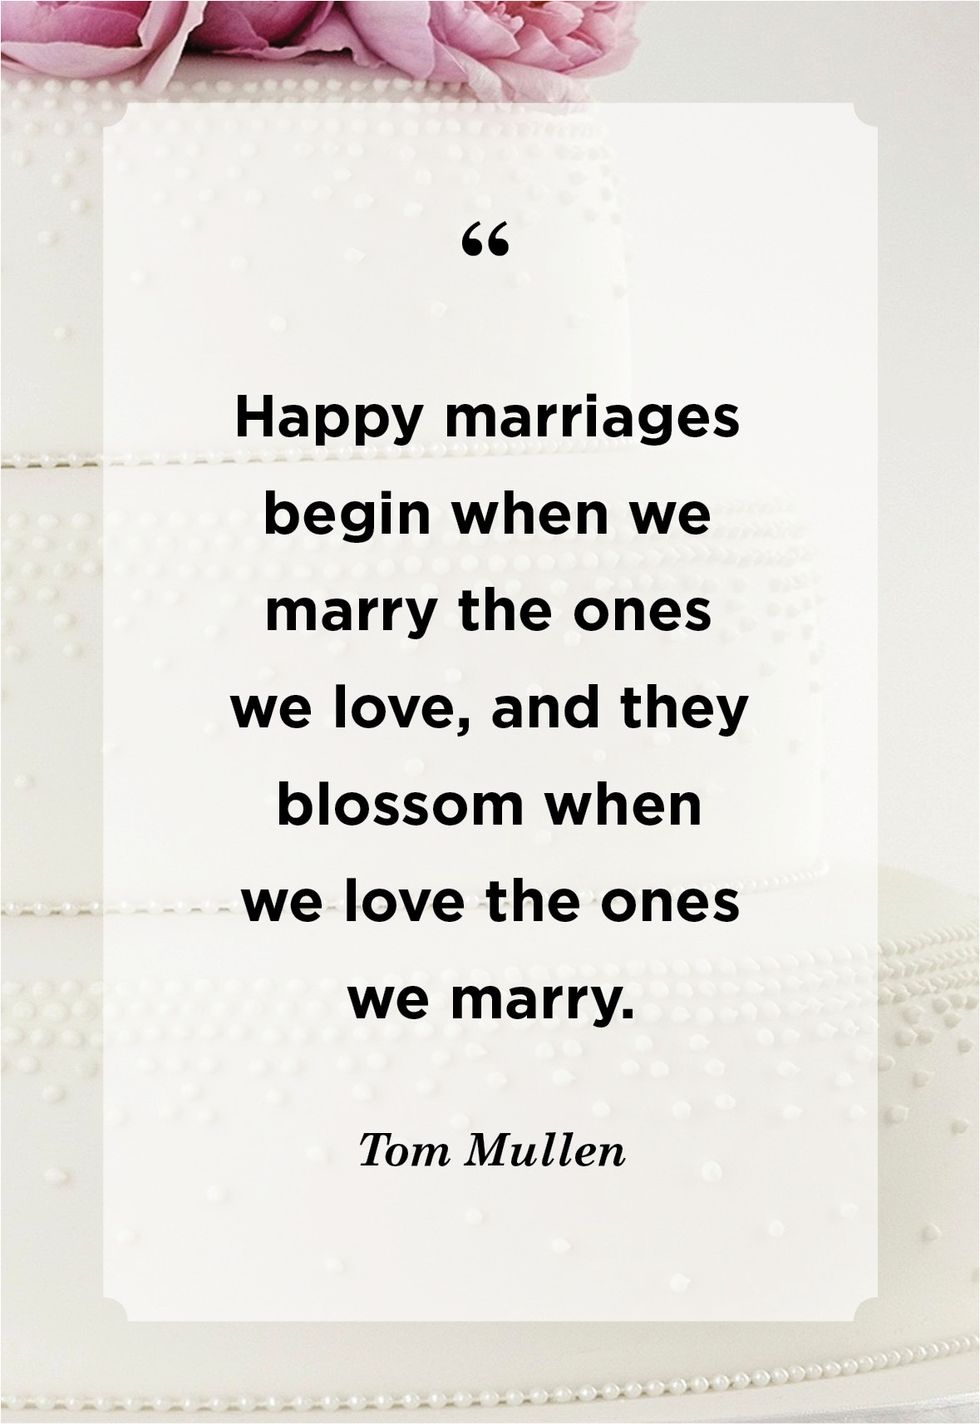 Inspirational love marriage quote true begins Vector Image